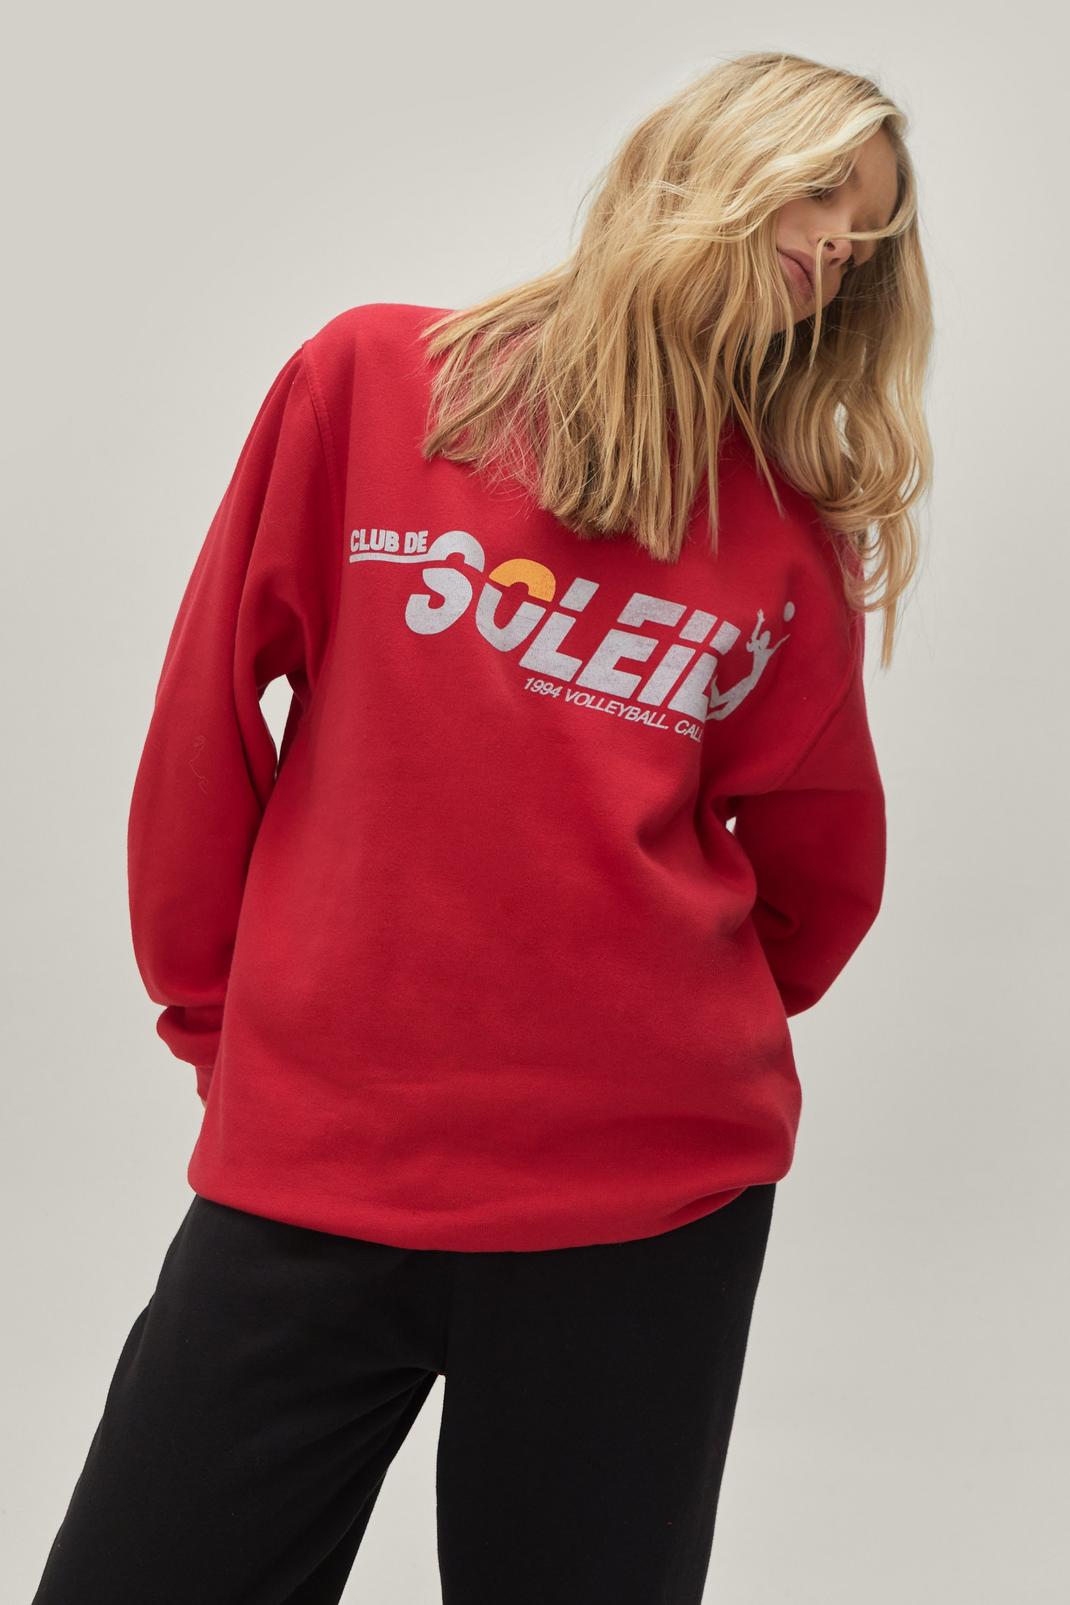 Red Club De Soleil Graphic Oversized Sweatshirt image number 1